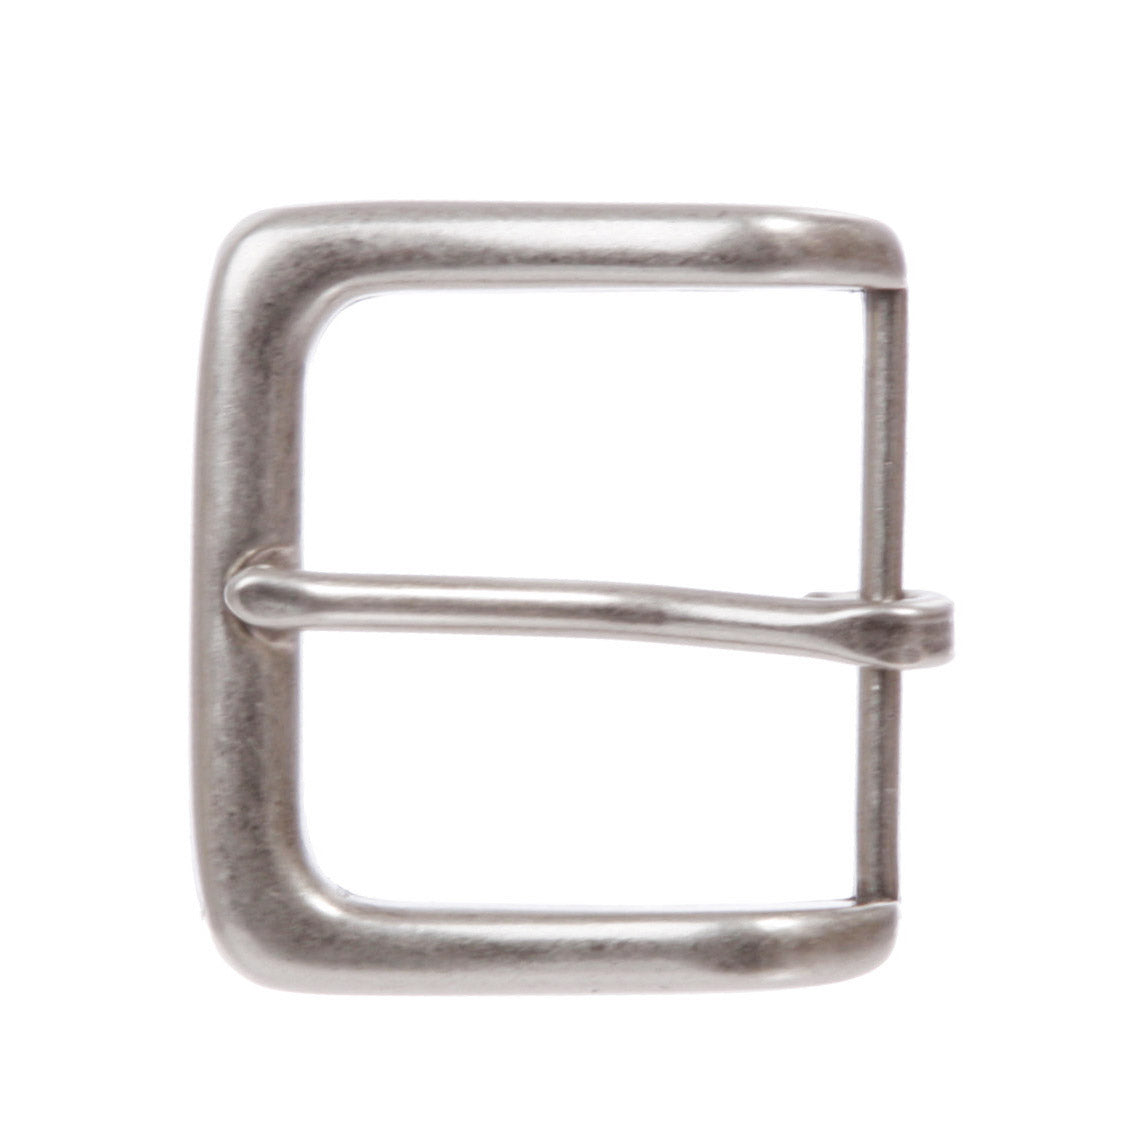 1 1/2" (38 mm) Single Prong Square Belt Buckle Antique Silver